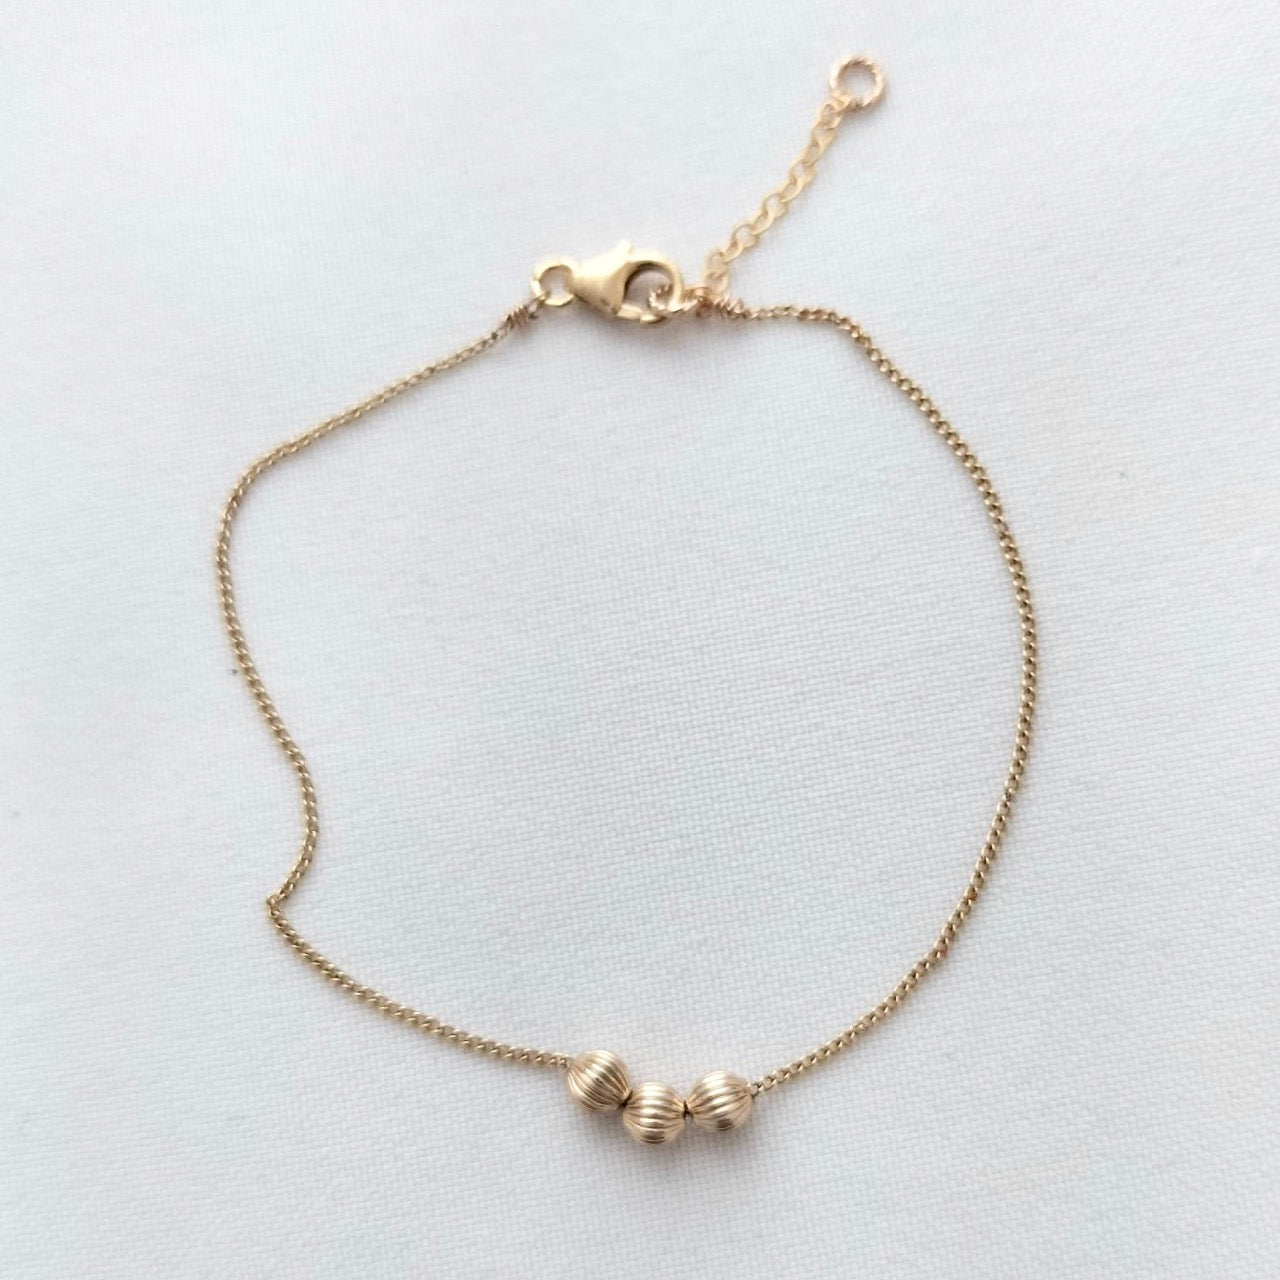 Dainty gold bead bracelet